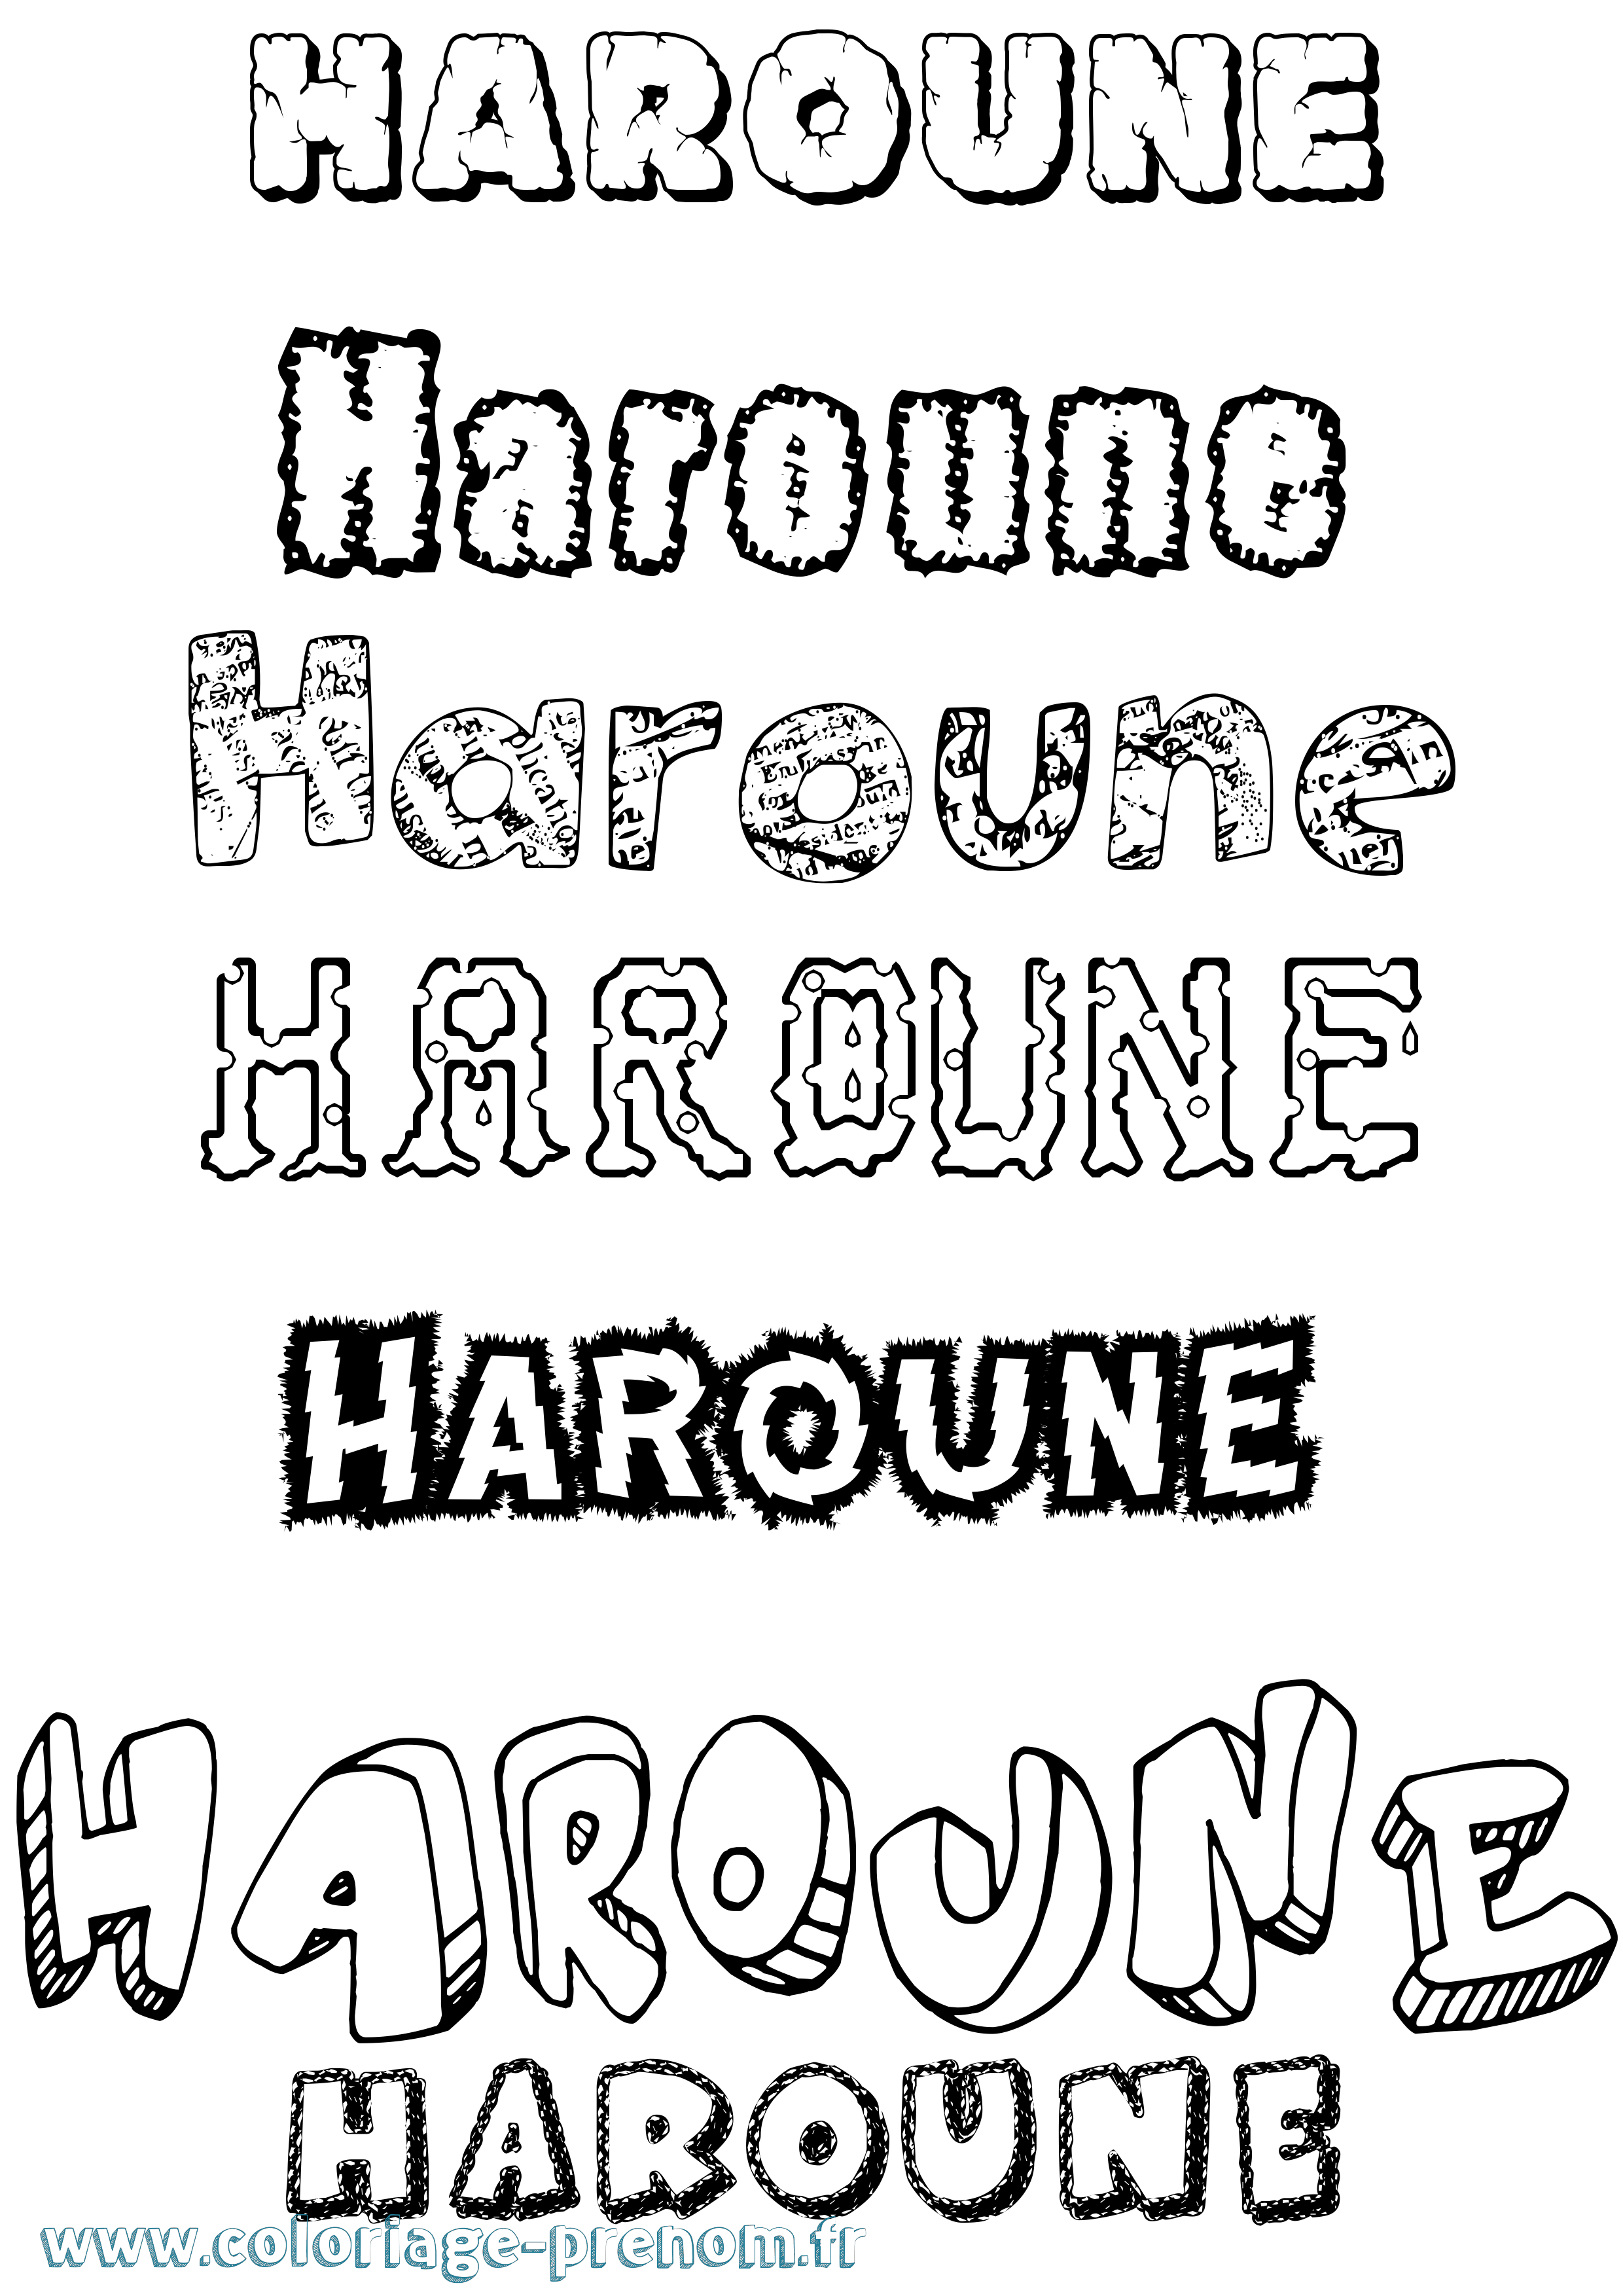 Coloriage prénom Haroune